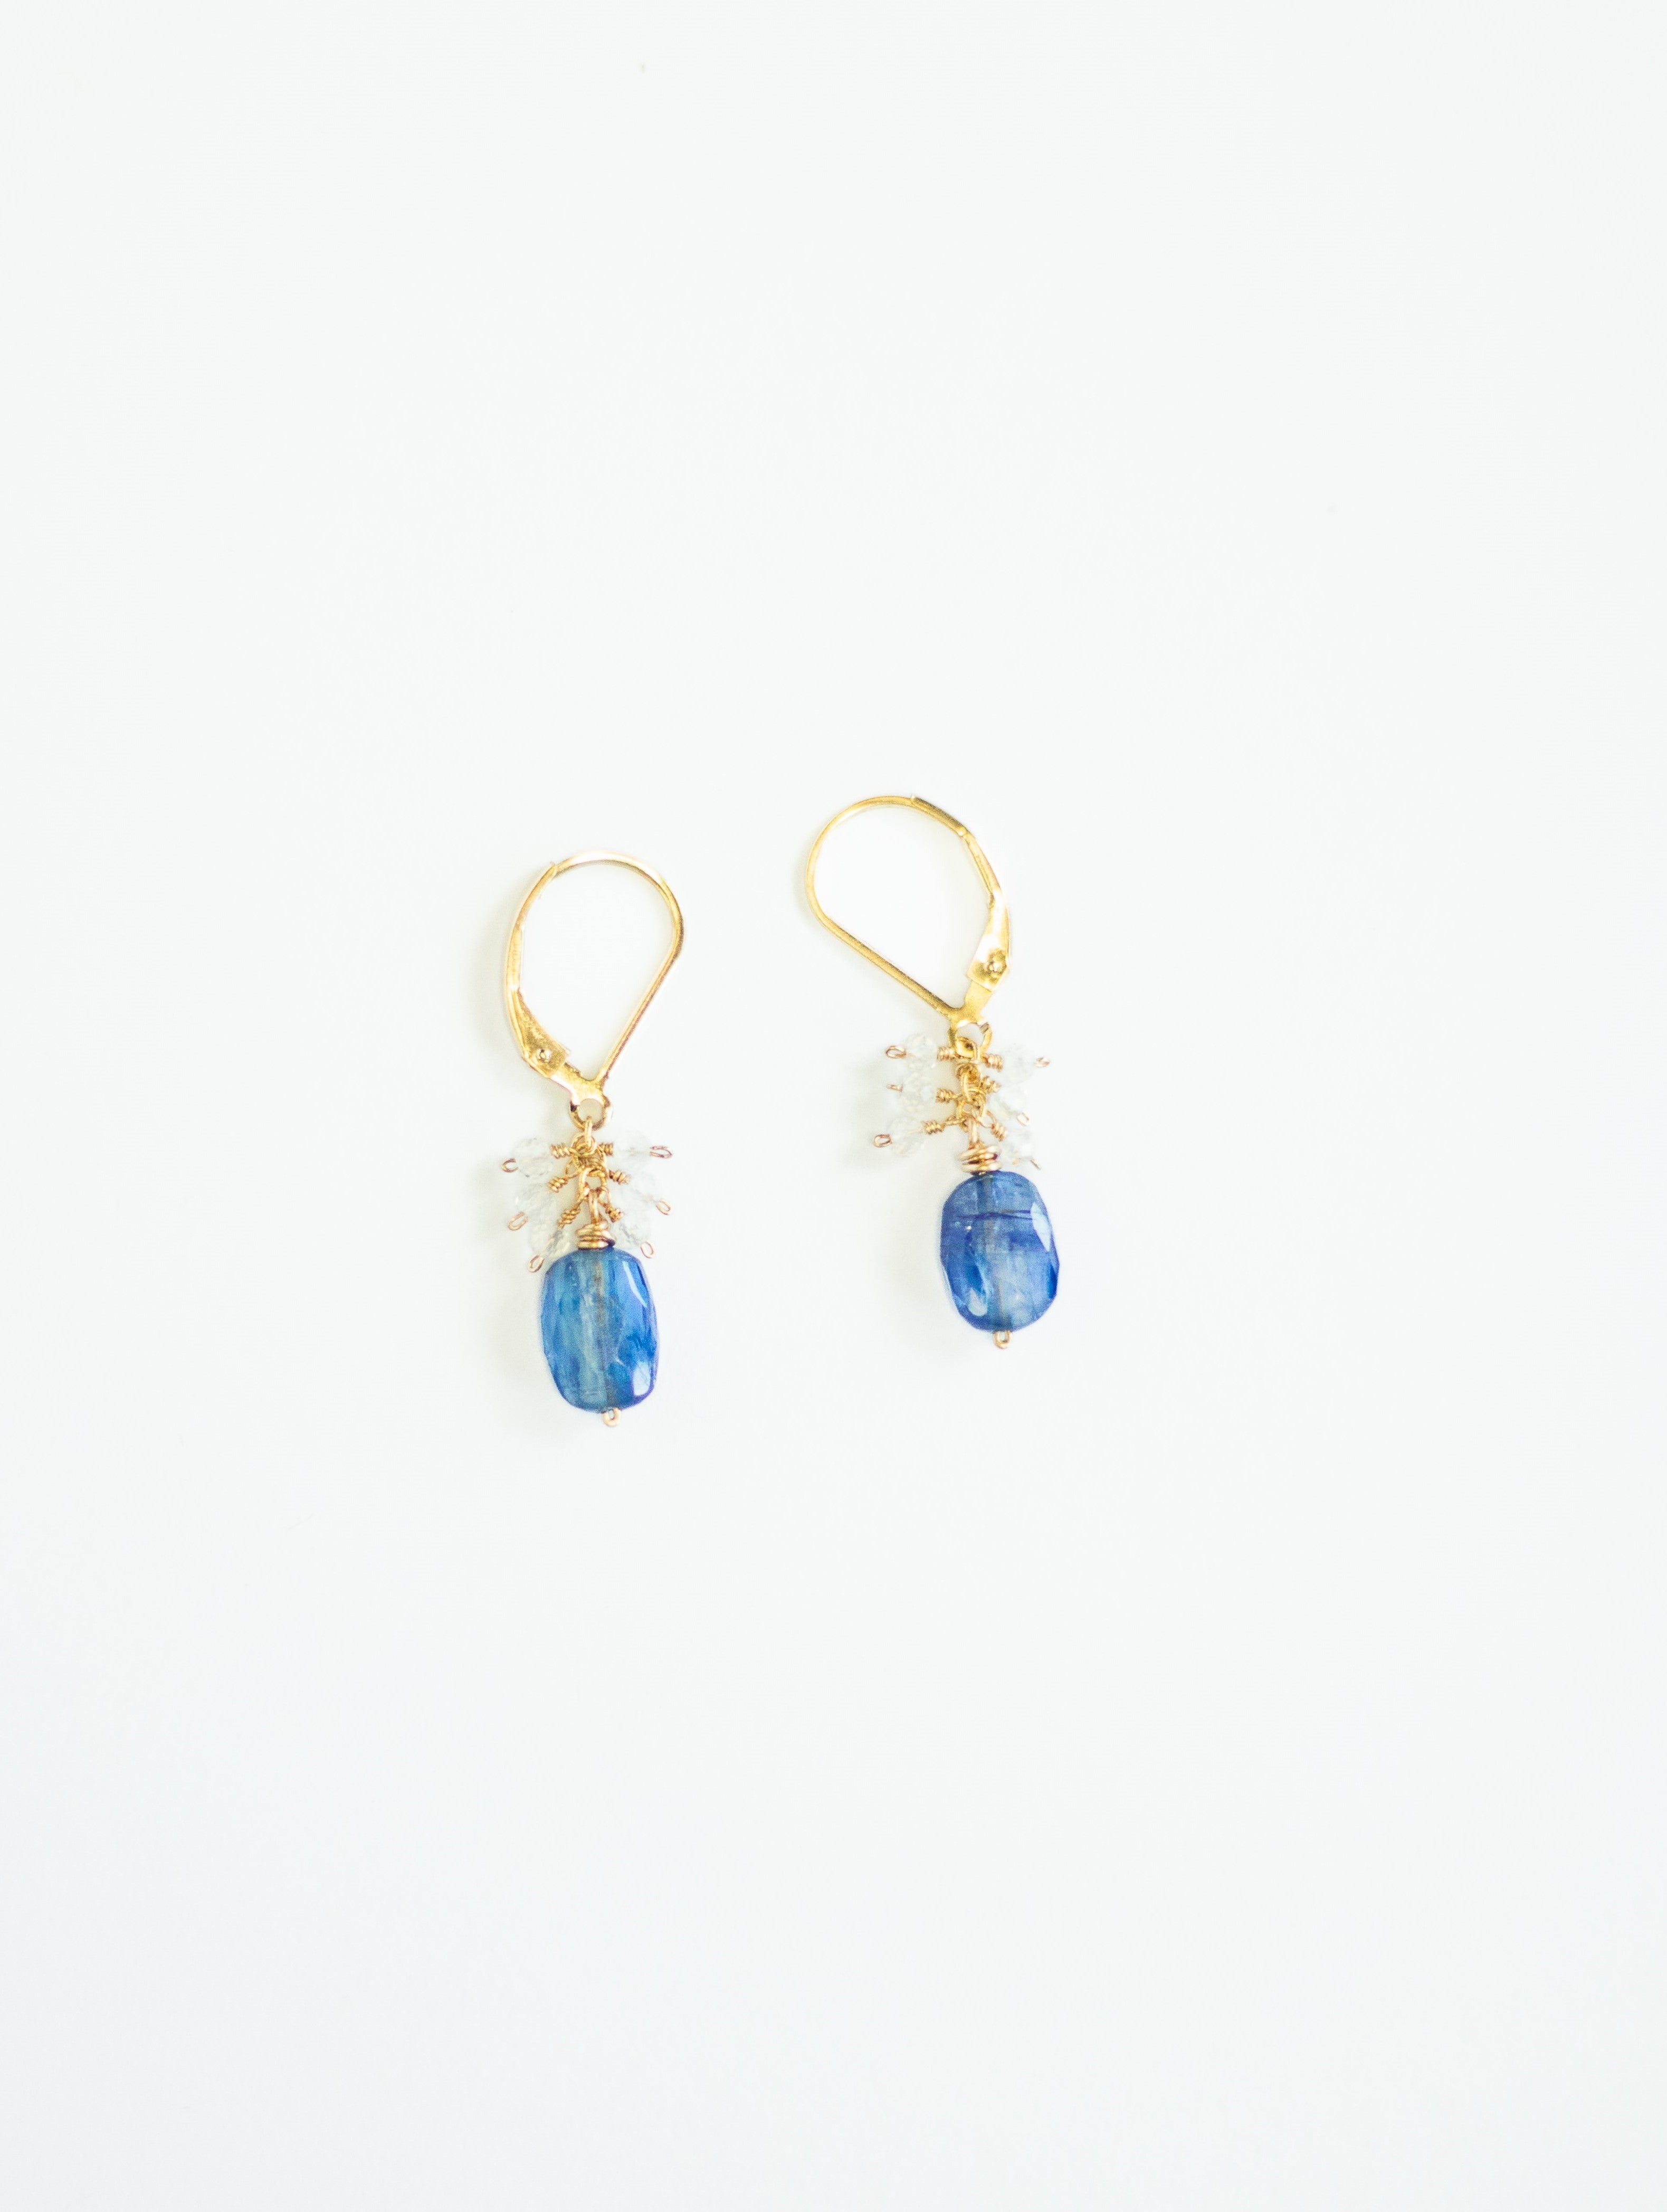 Blue Kyanite & Moonstone Earrings by Julia Balestracci